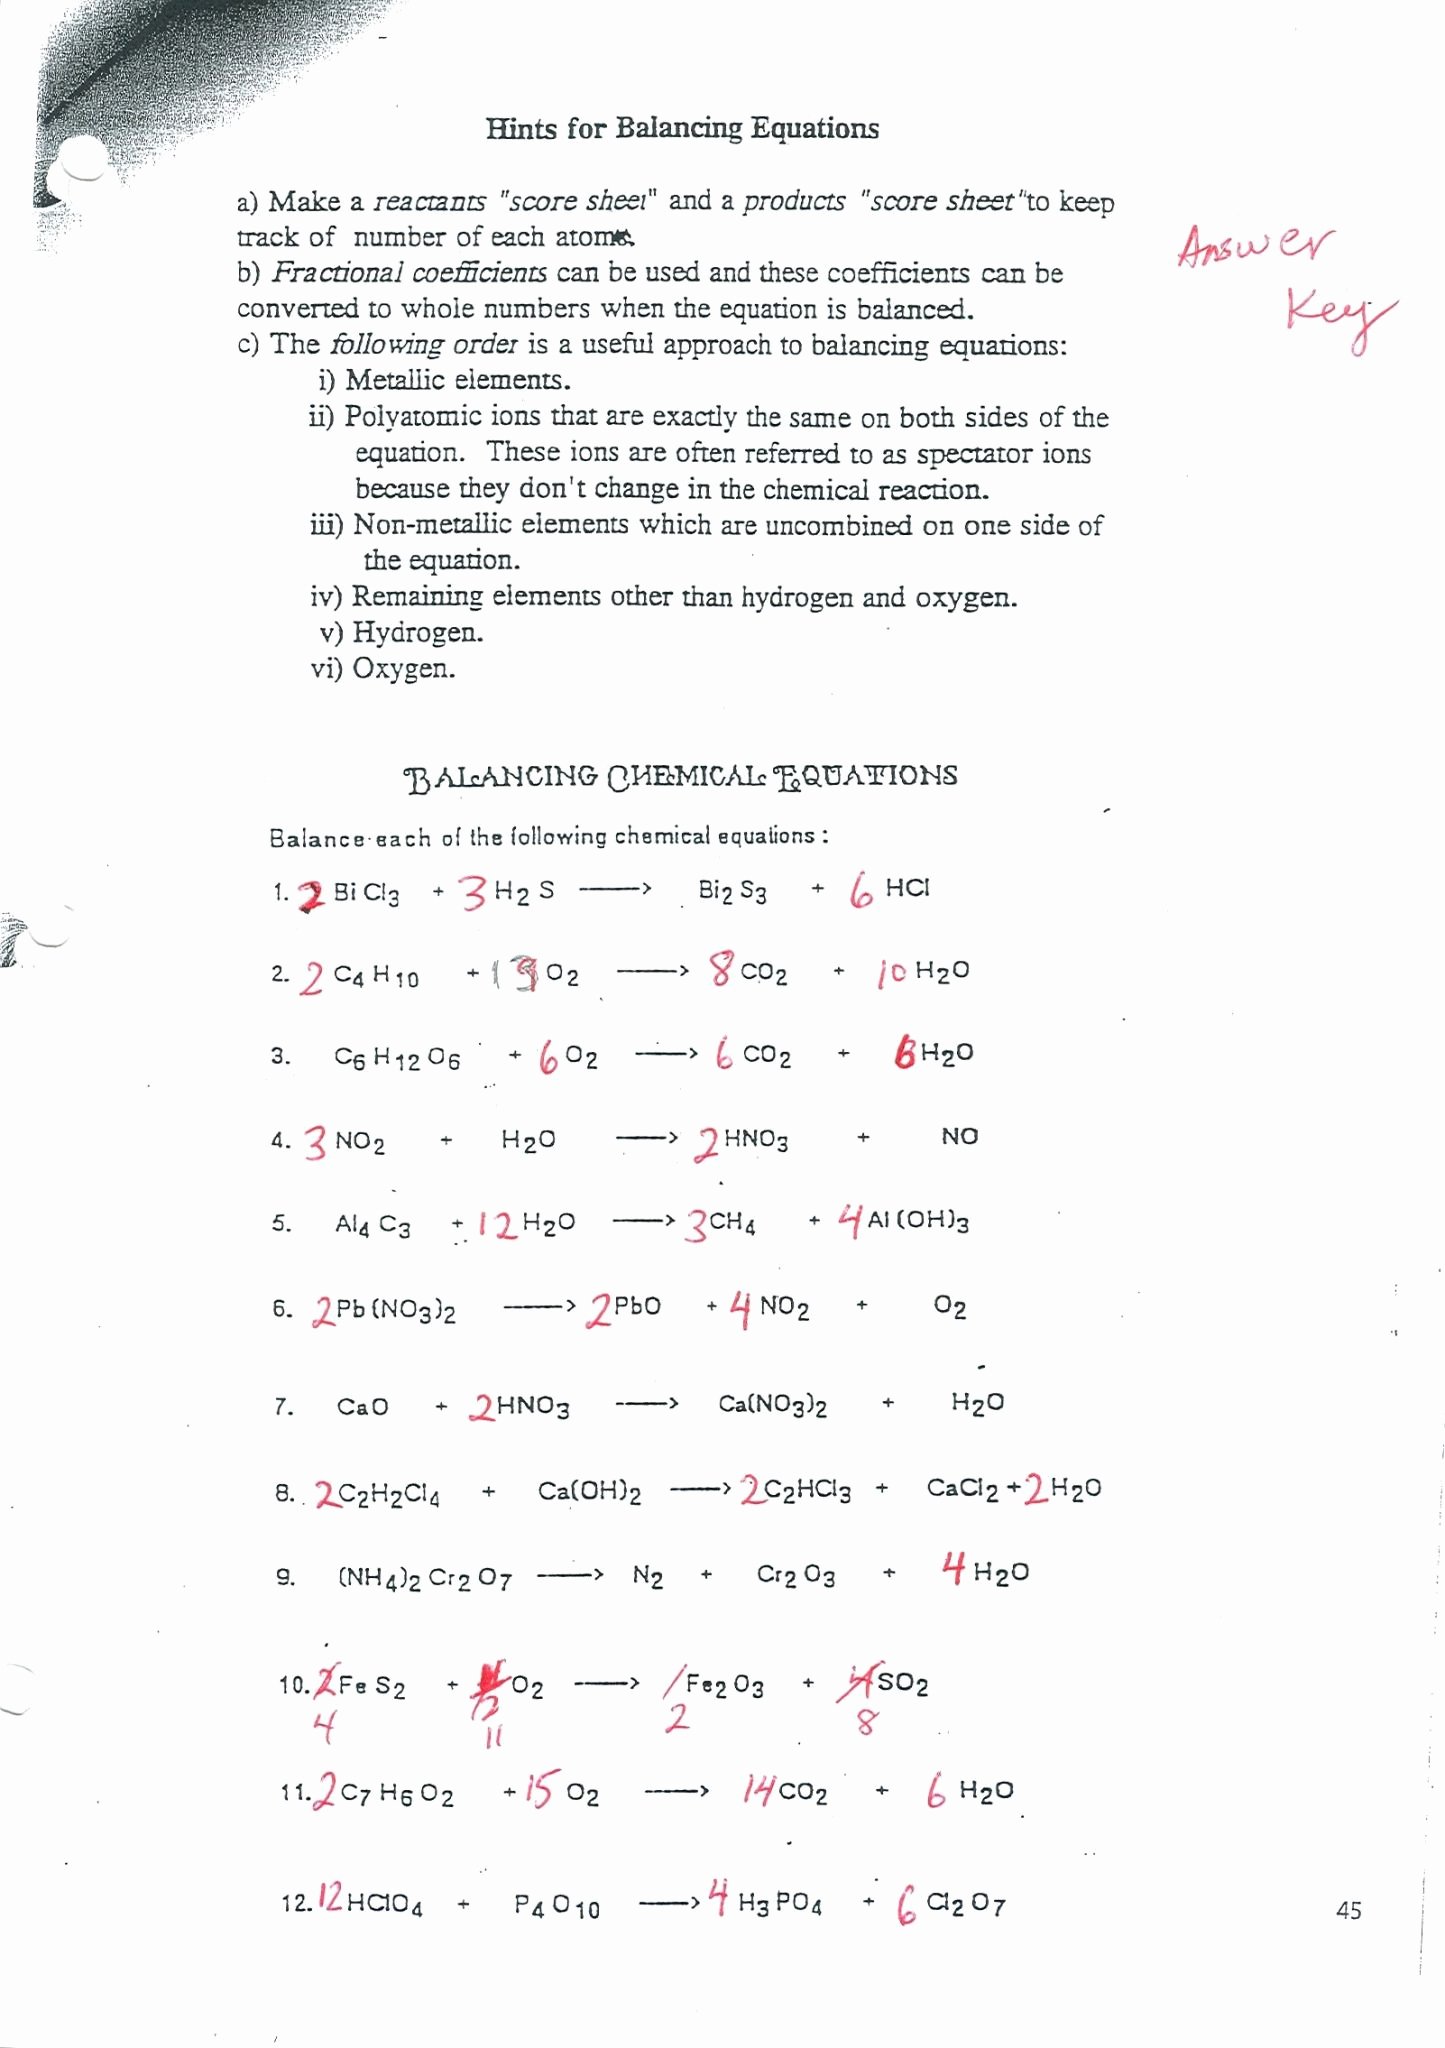 Balancing Equations Worksheet Answer Key Fresh Balancing Chemical Equations Worksheet Answer Key